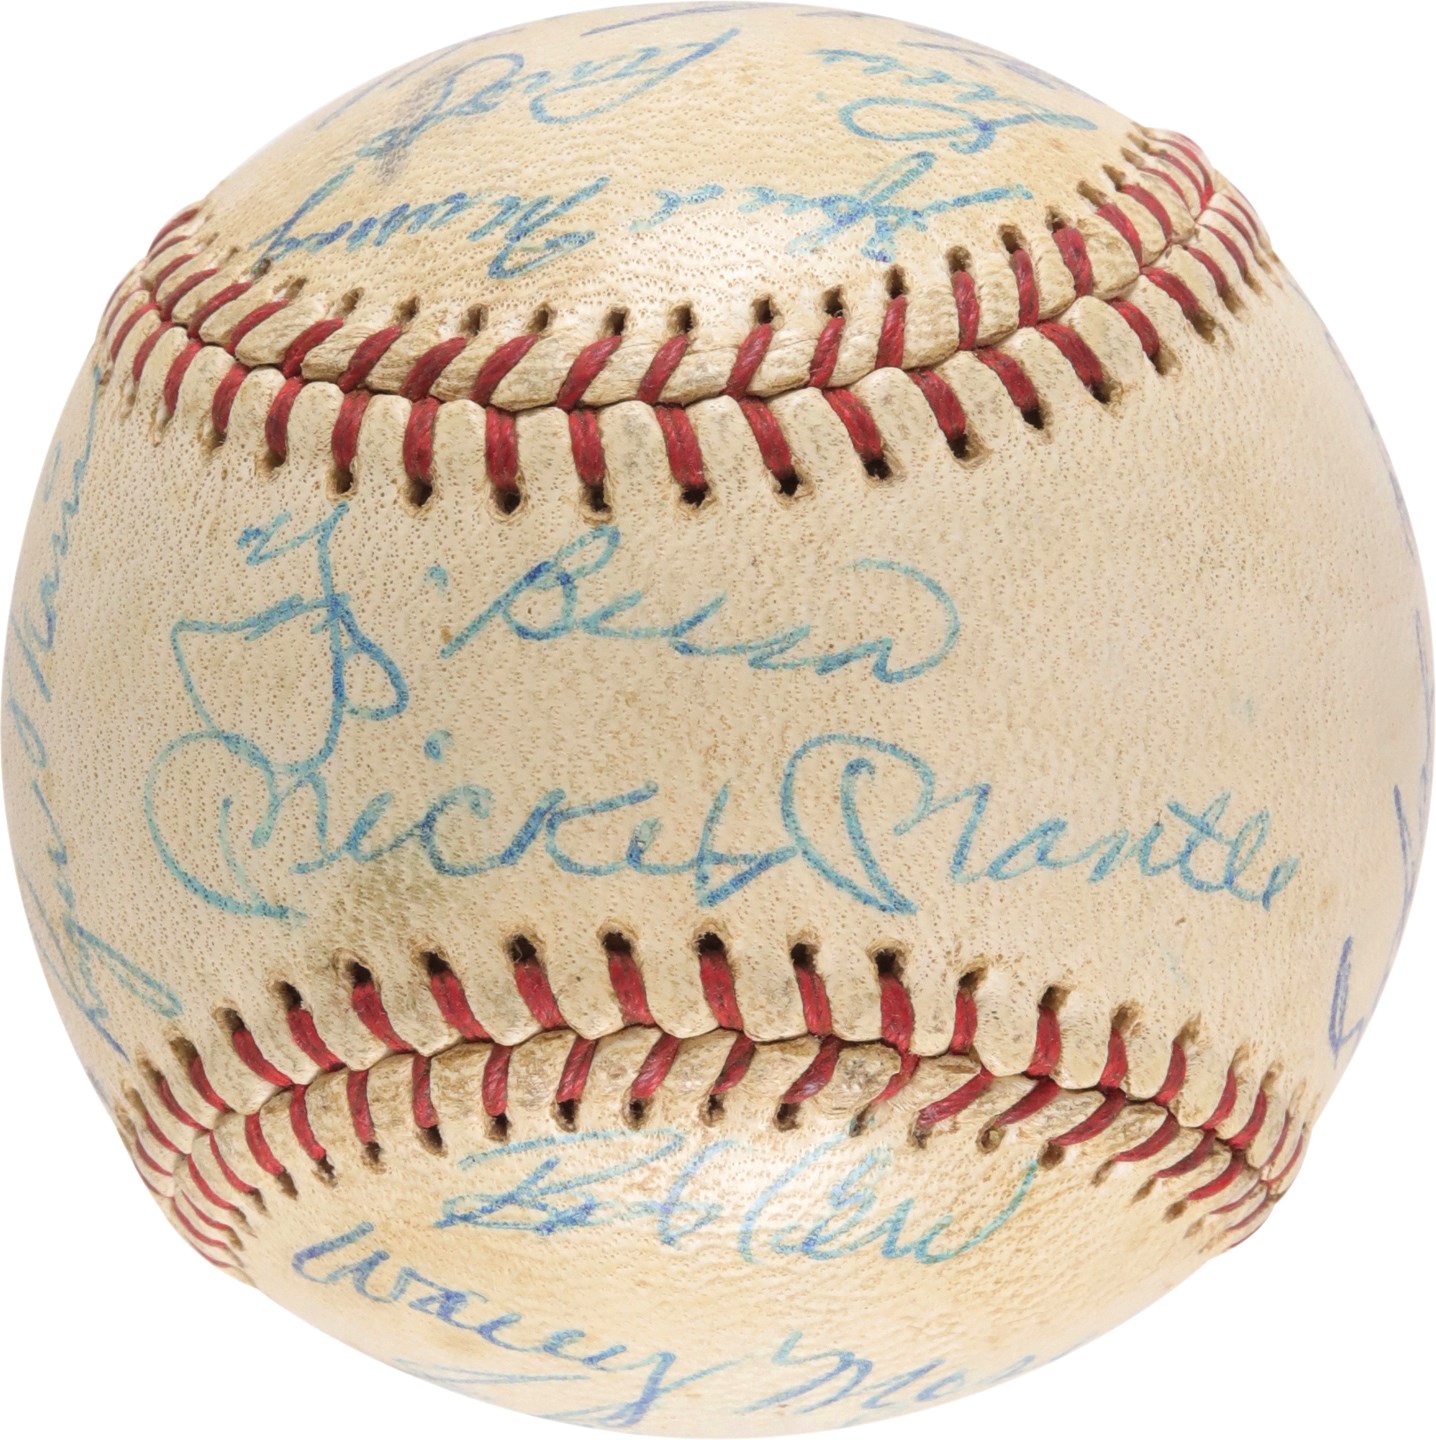 Baseball Autographs - Outstanding 1961 World Champion New York Yankees Team-Signed Baseball - Zero Clubhouse (PSA)